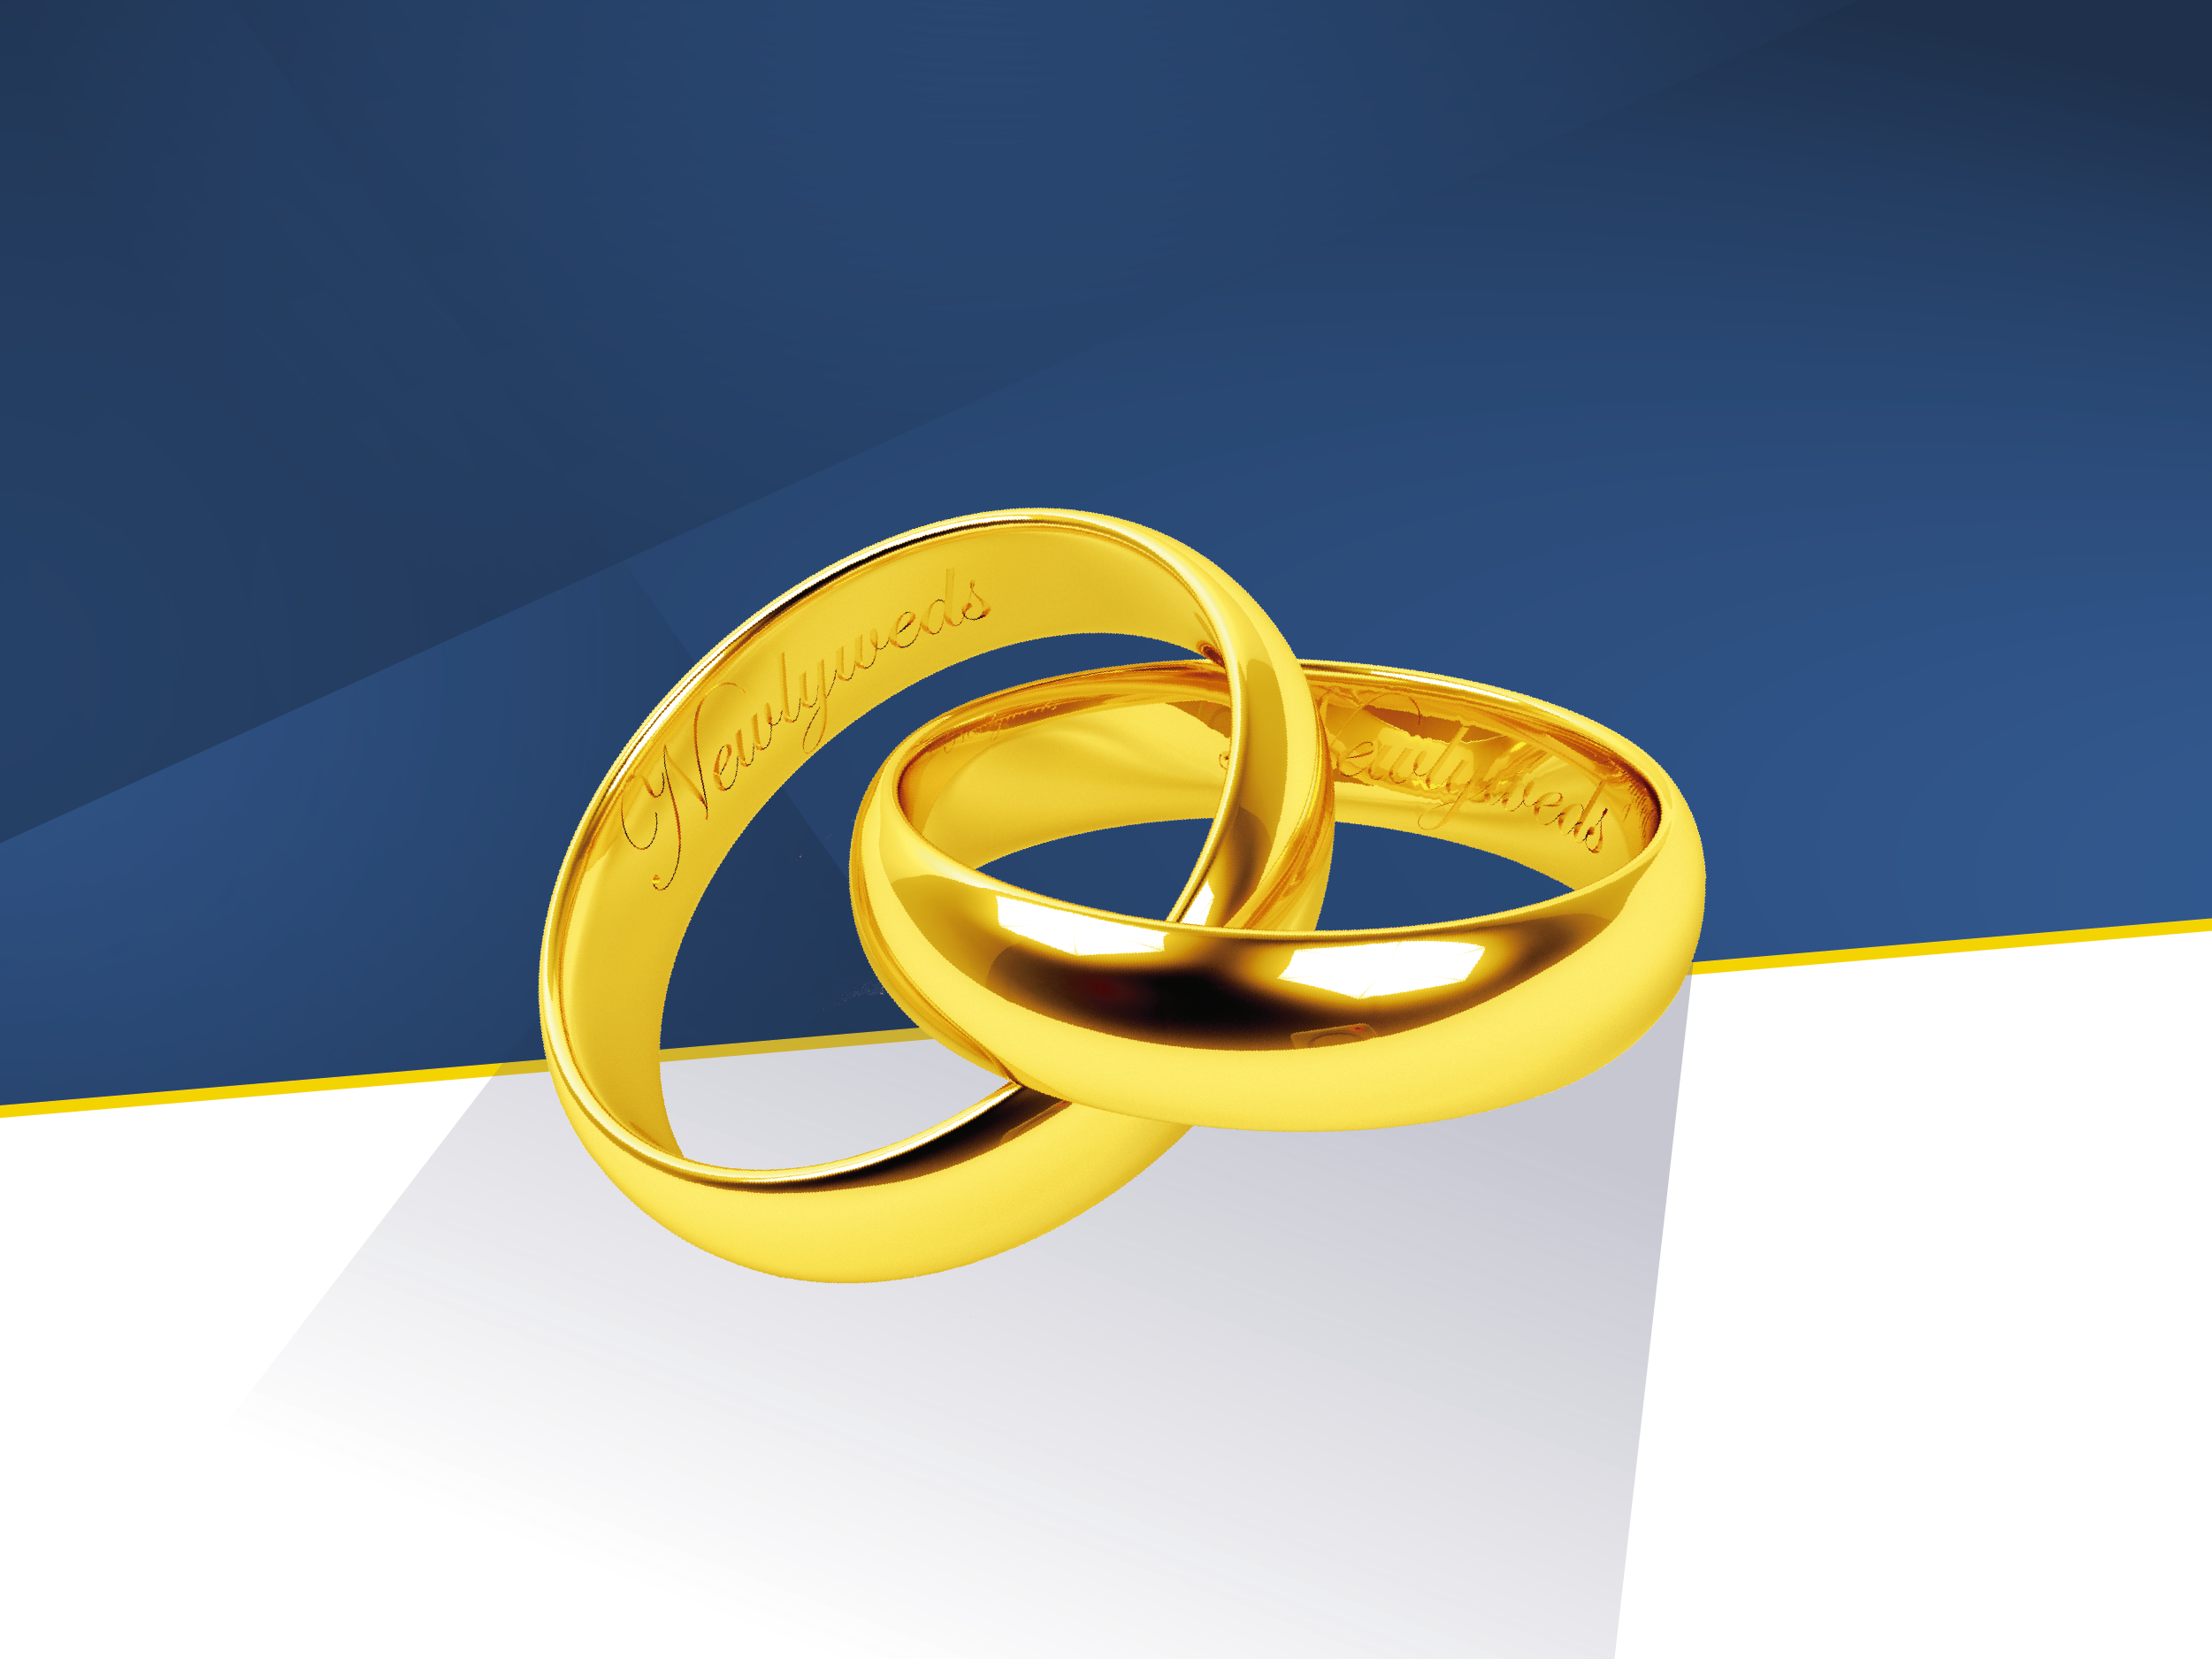 Jefferies Law Marriage